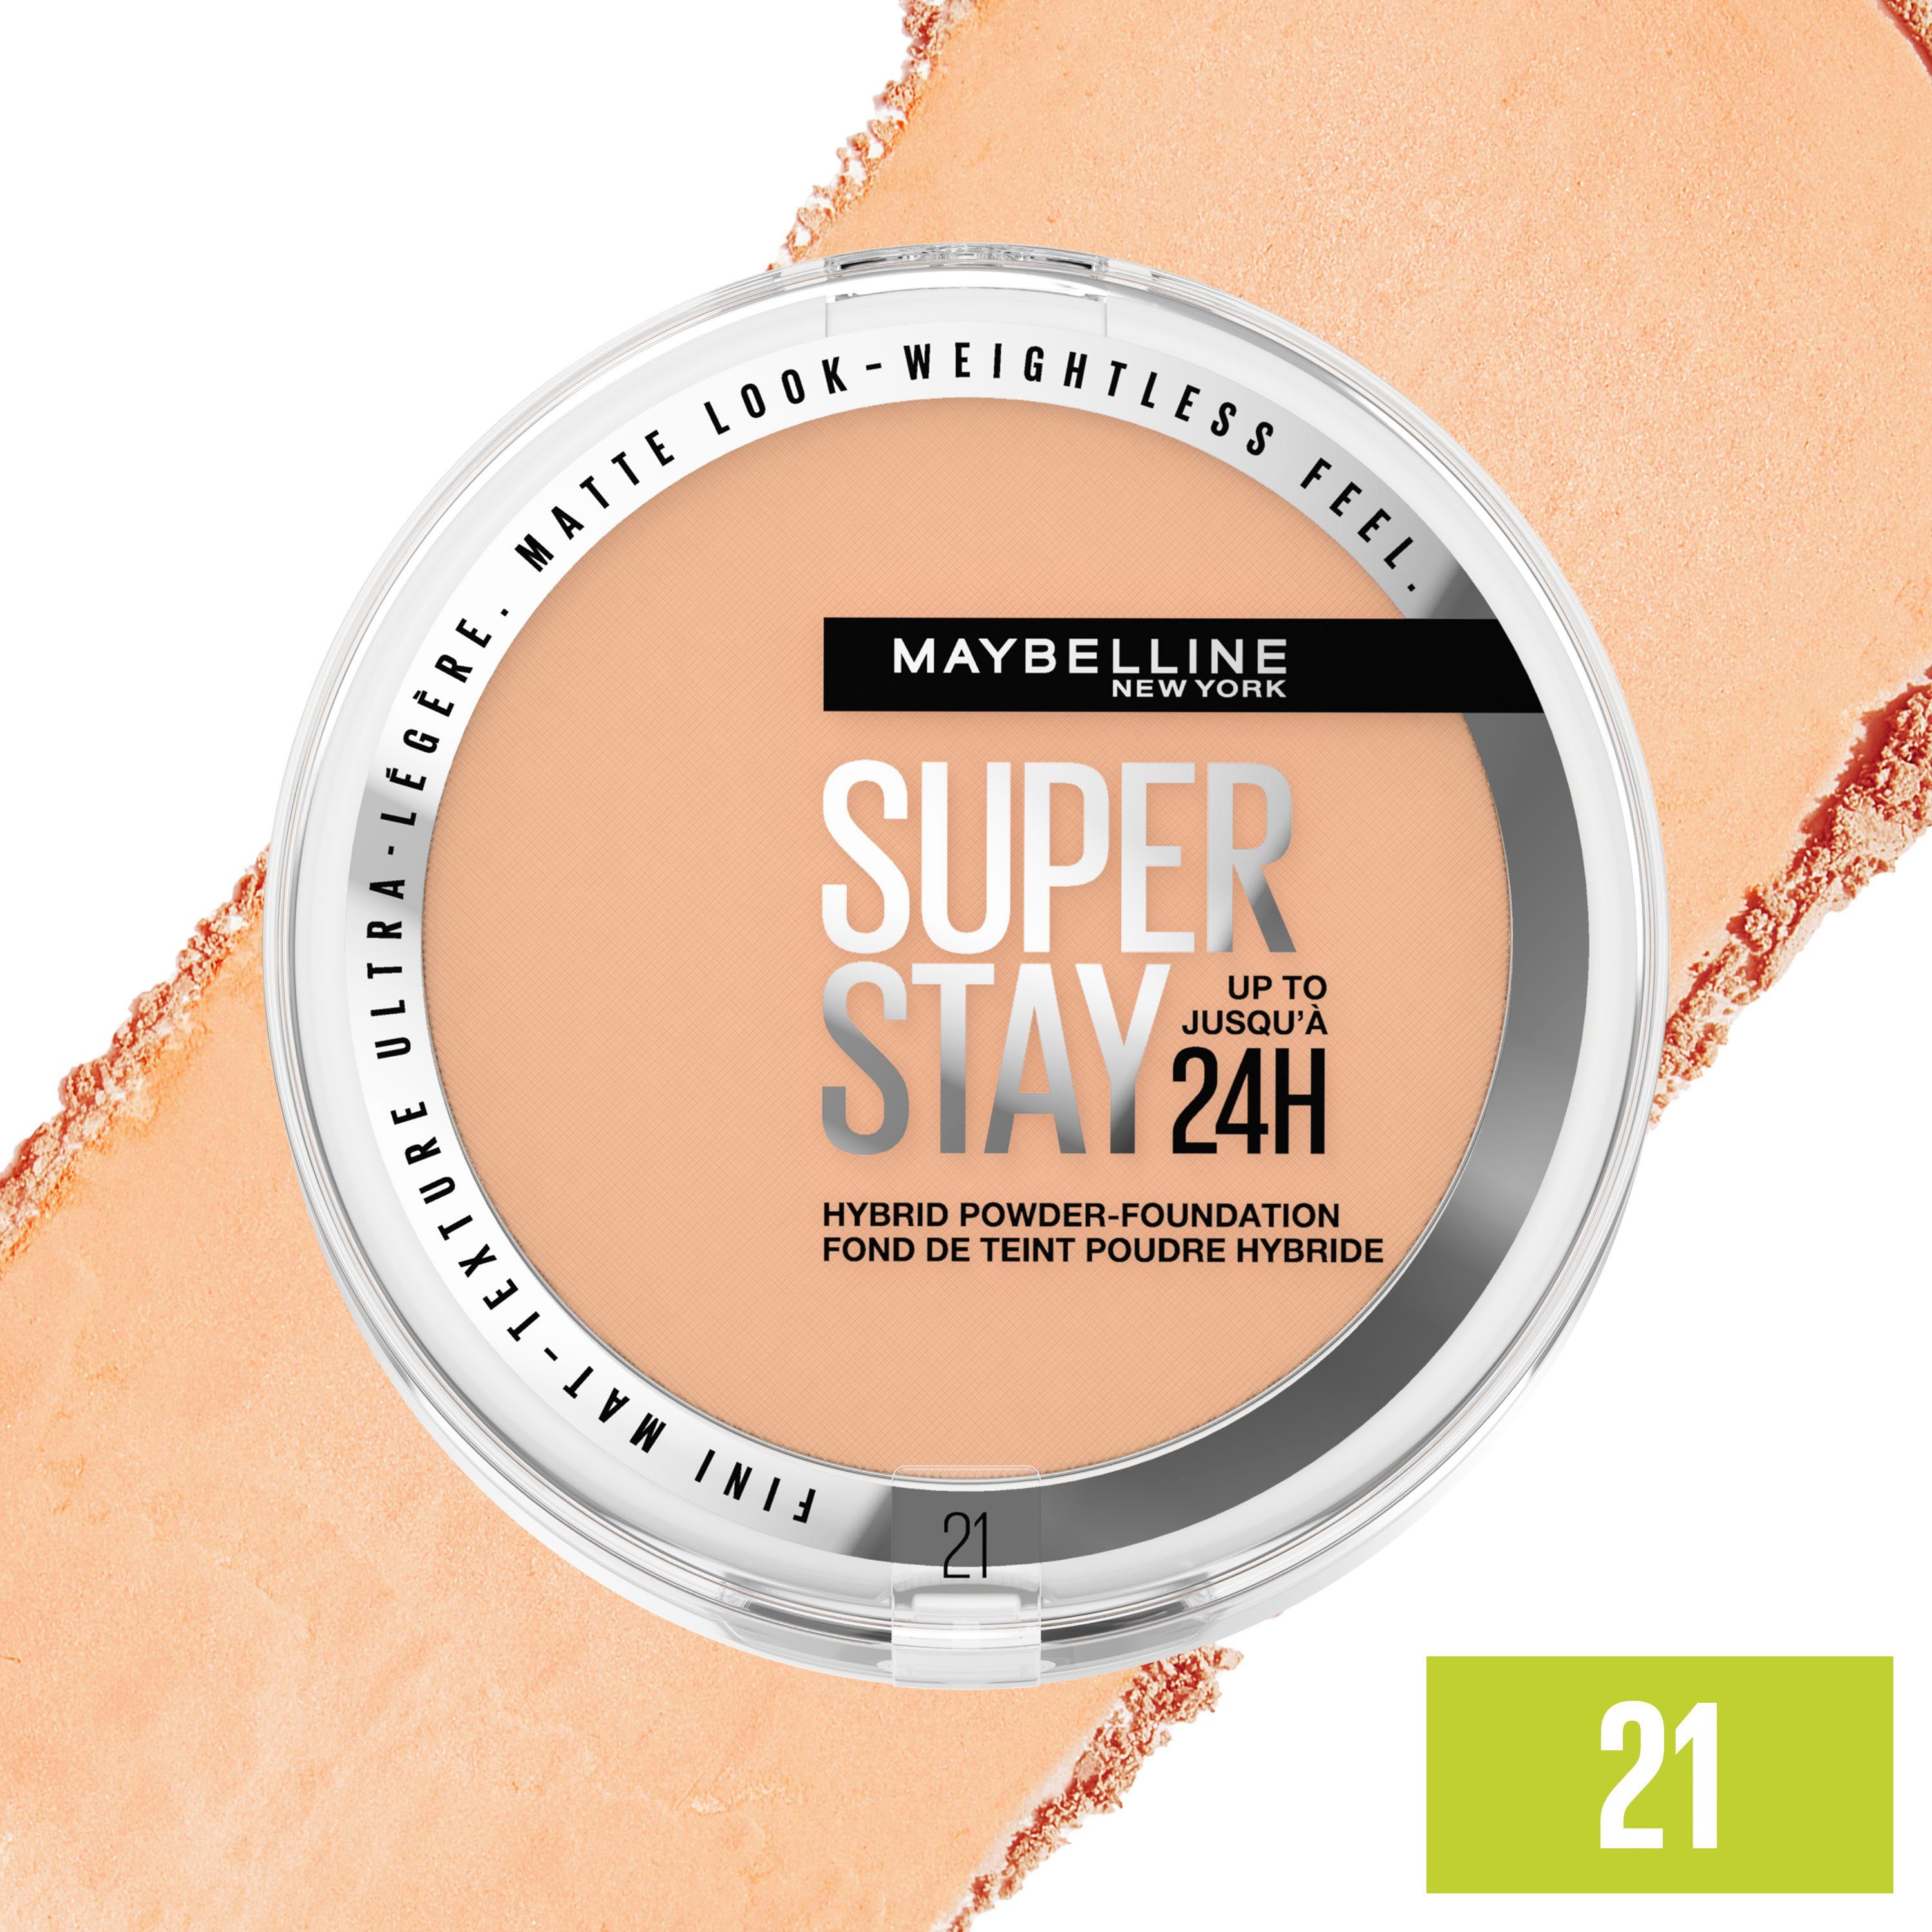 Maybelline Foundation Puder Stay NEW Super MAYBELLINE New Make-Up YORK York Hybrides